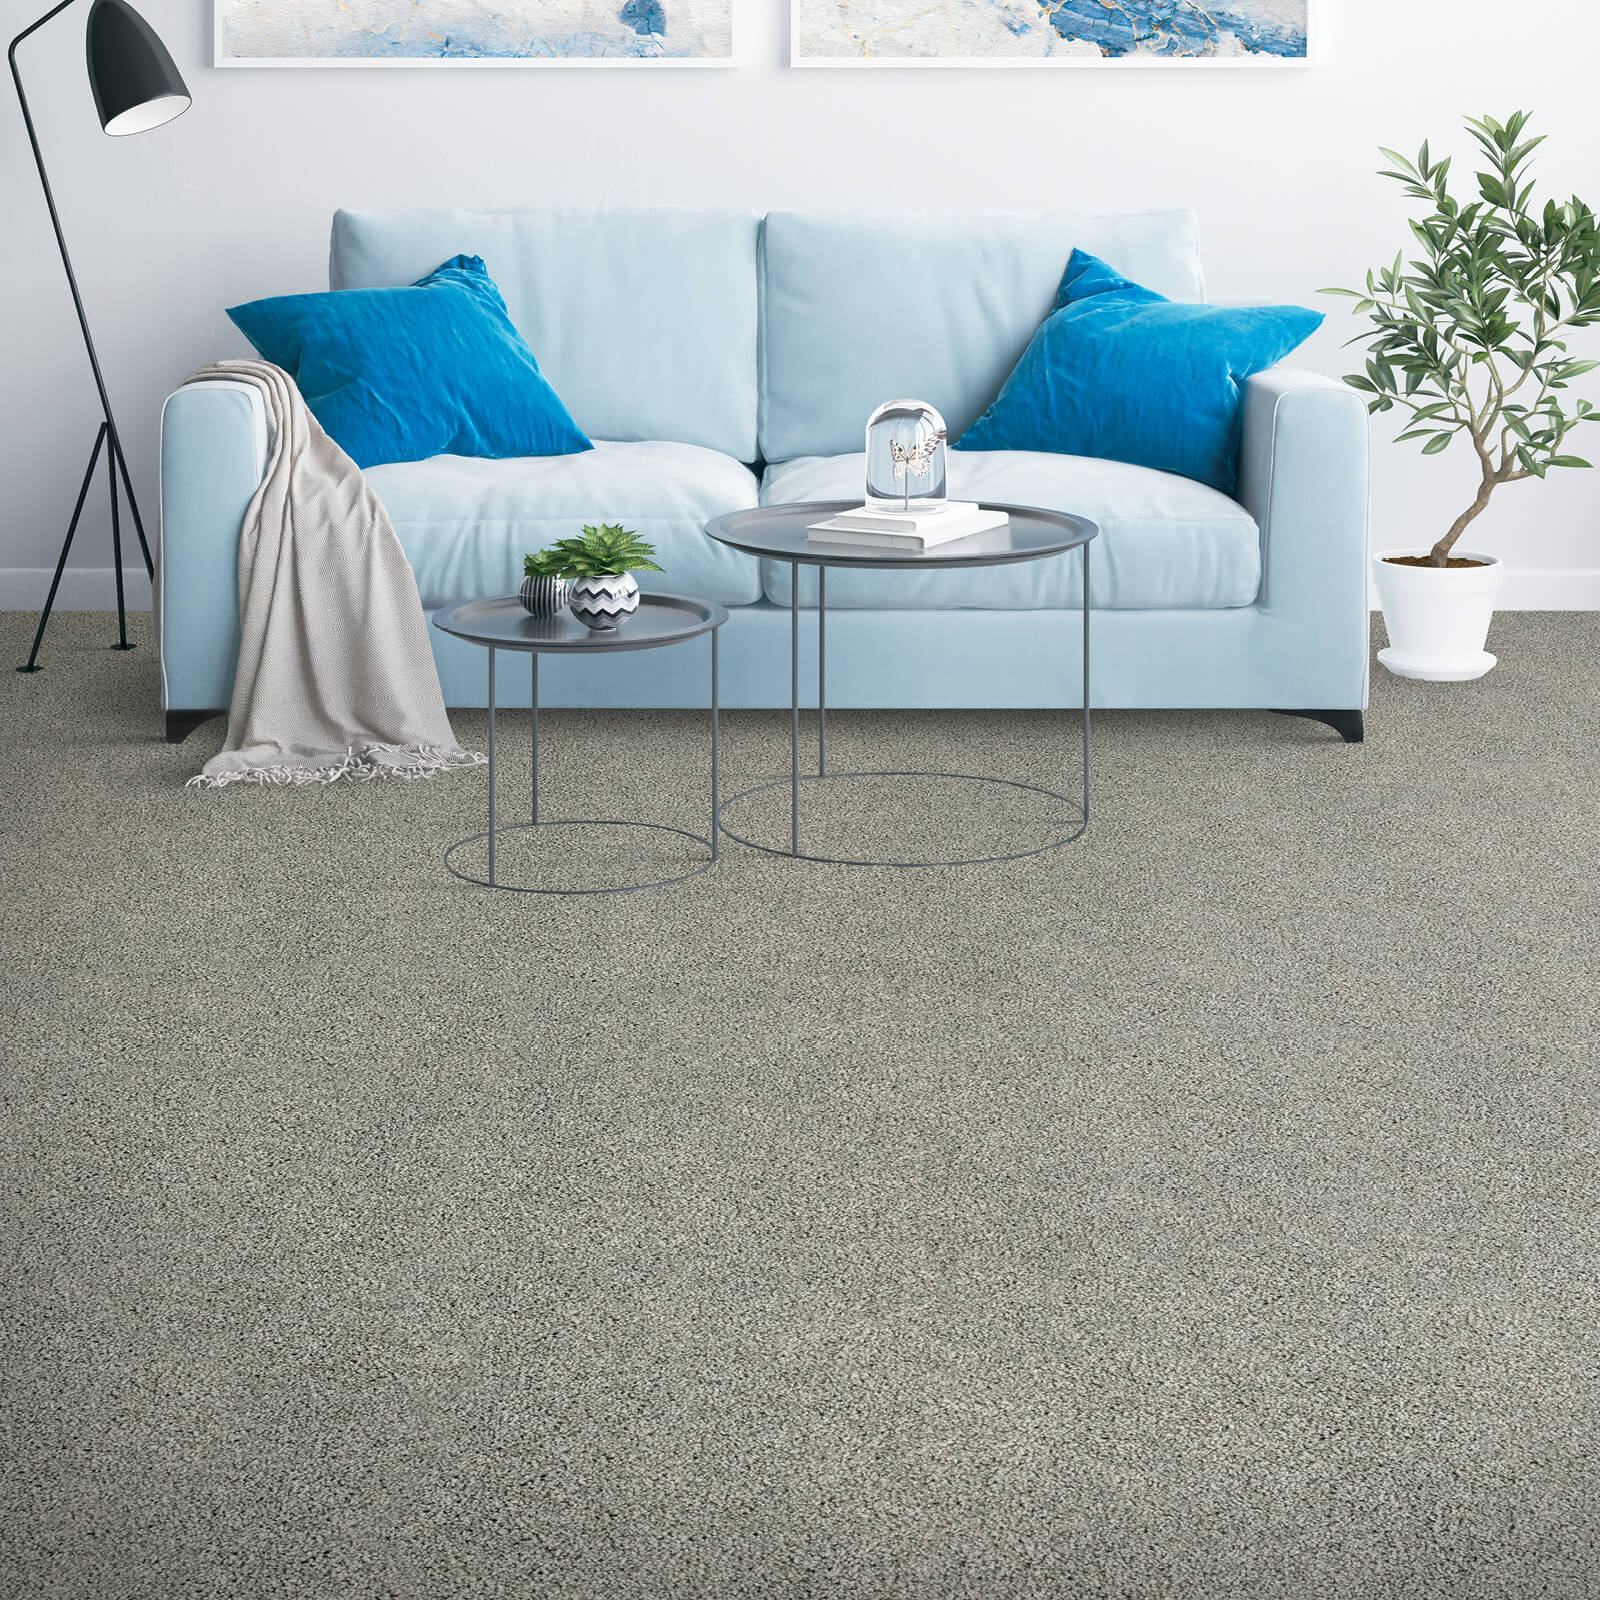 Couch on grey Carpet | J/K Carpet Center, Inc